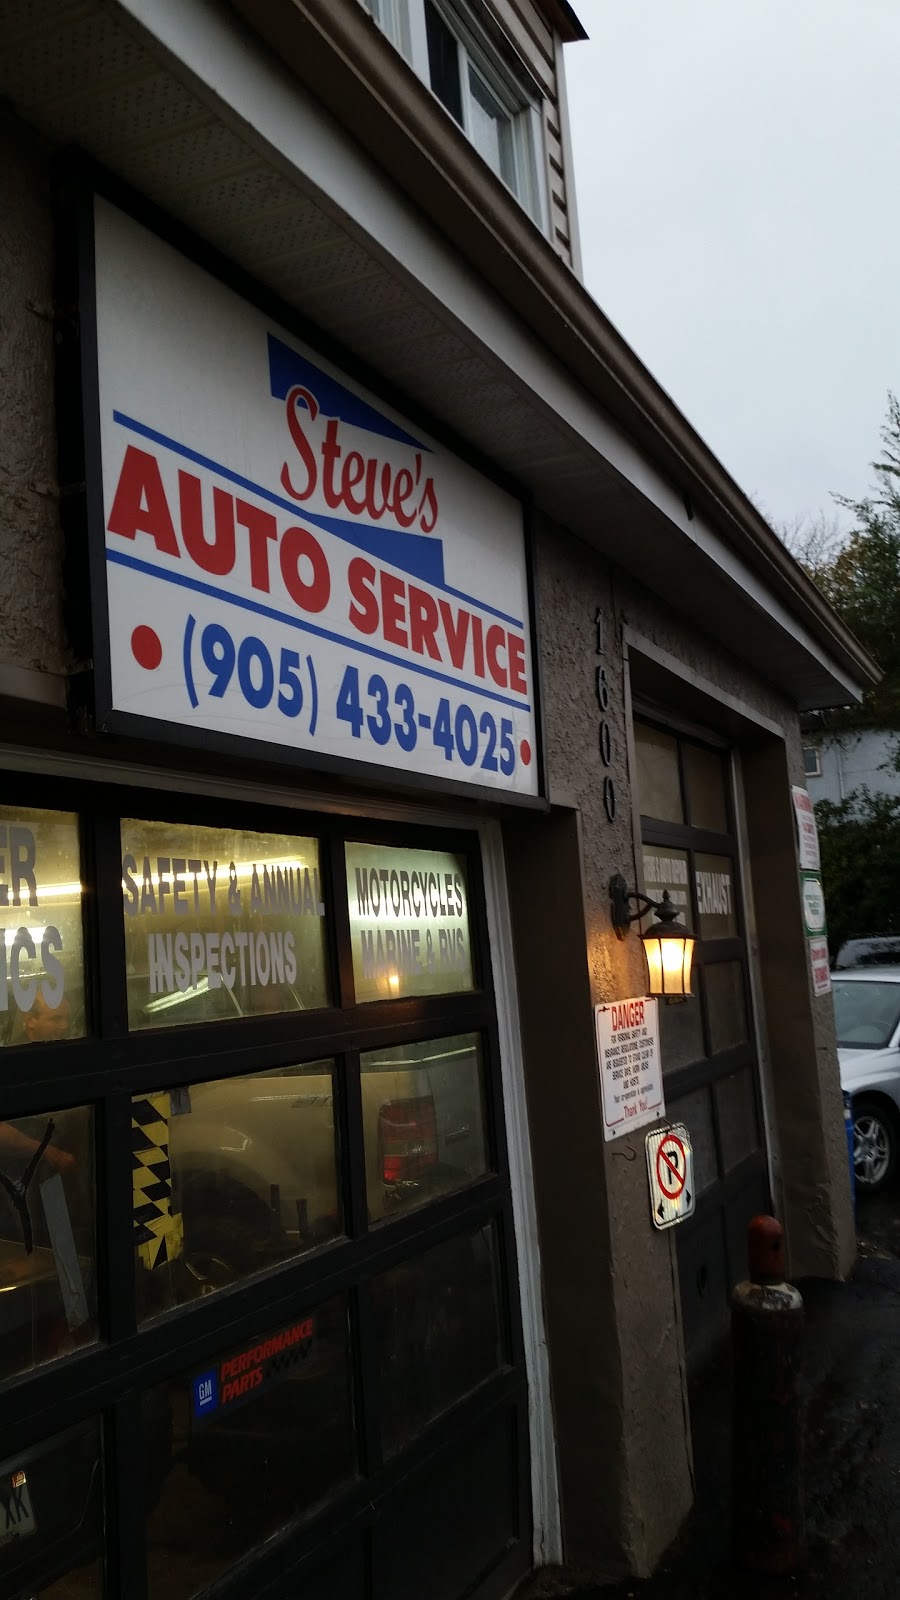 Steves Auto Repair | 1600 Simcoe St N, Oshawa, ON L1G 4X9, Canada | Phone: (905) 433-4025